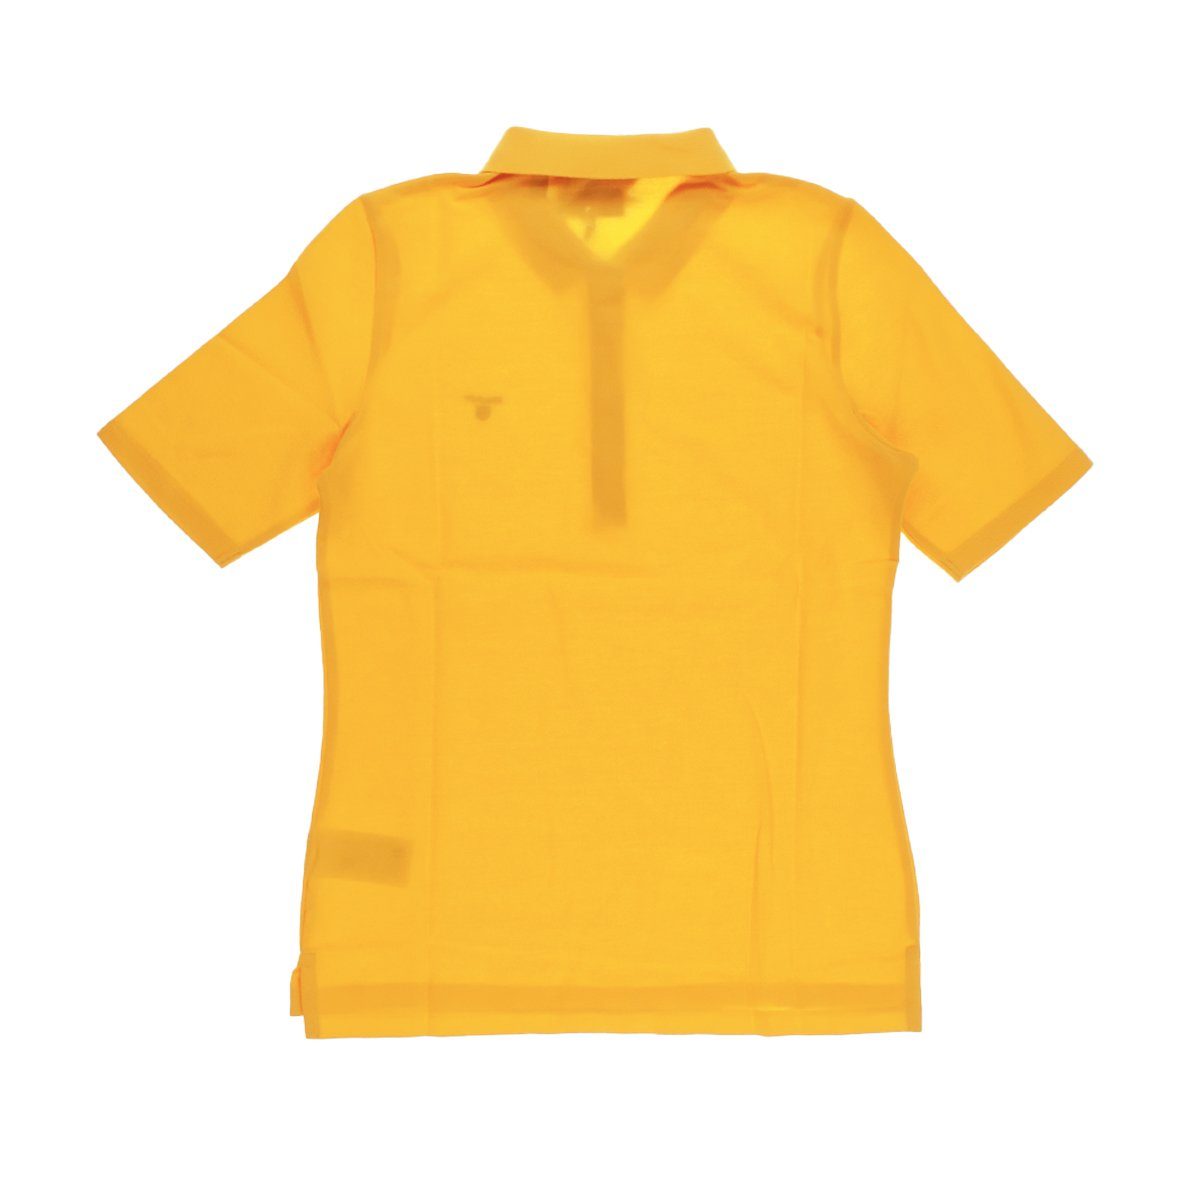 Gant Poloshirt 402210 Damen Gelb(728 The Baumwolle Original Pique Unifarben aus Poloshirt Solar Gelb)